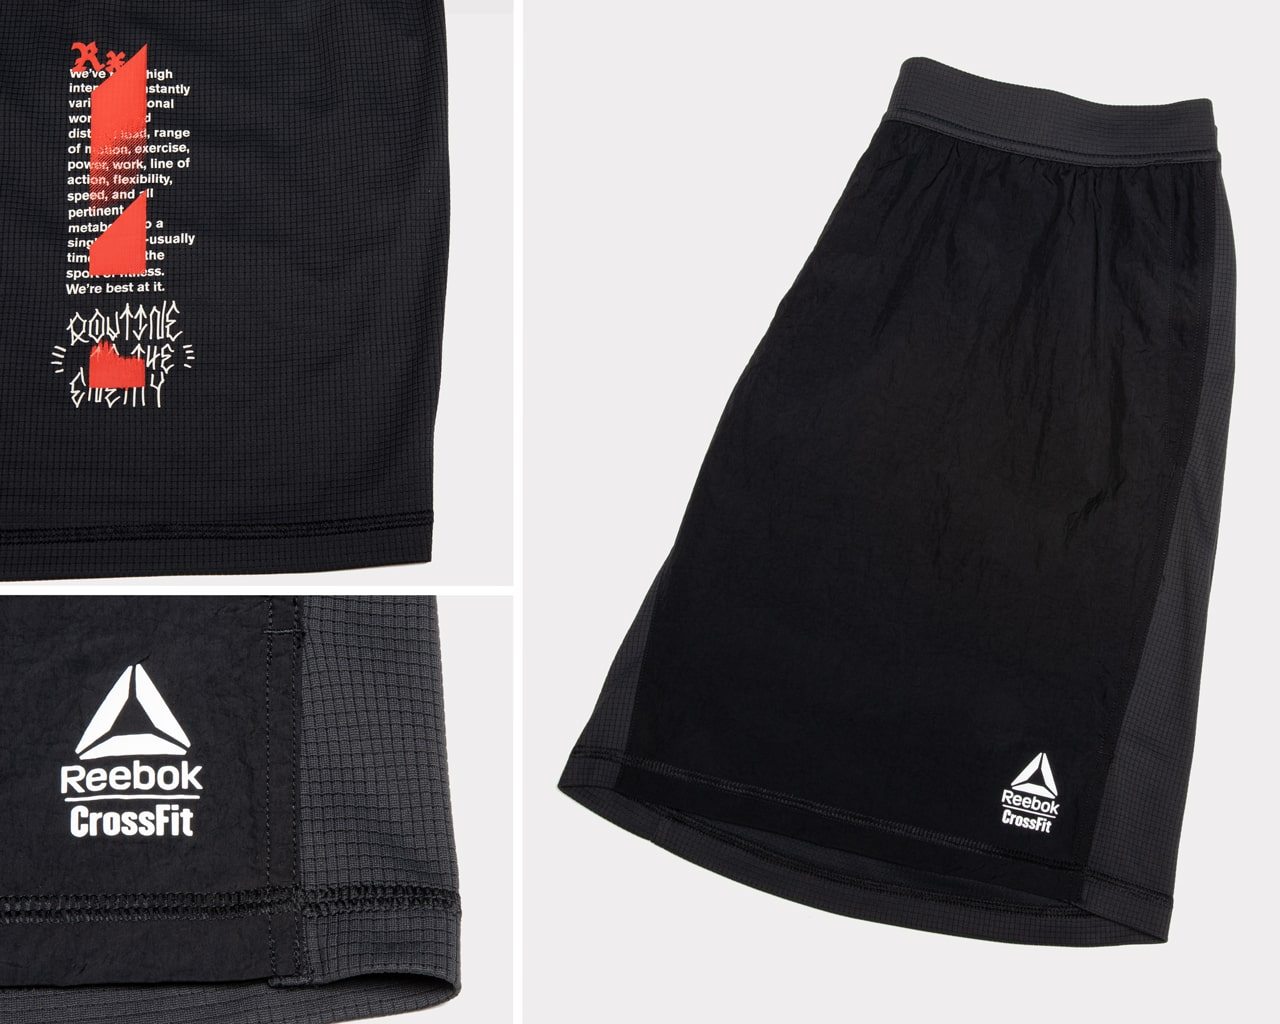 Reebok CrossFit Hybrid Shorts